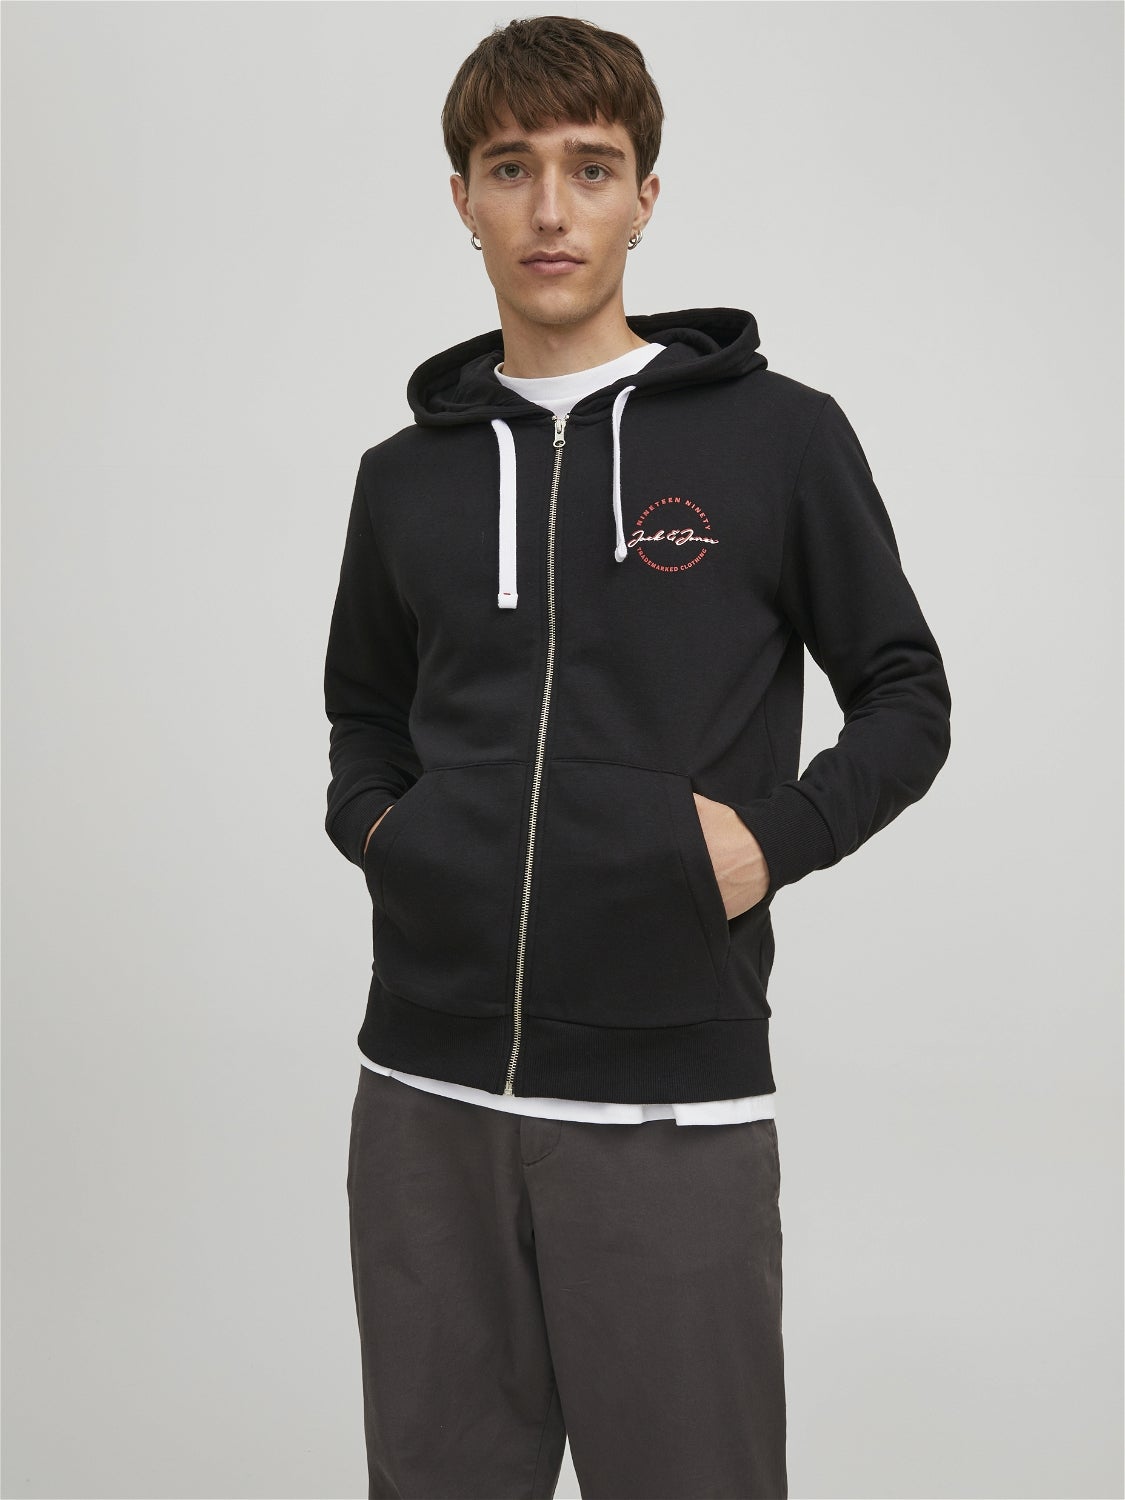 MEN FASHION Jumpers & Sweatshirts Hoodie Jack & Jones sweatshirt discount 56% Black/Gray/Orange M 